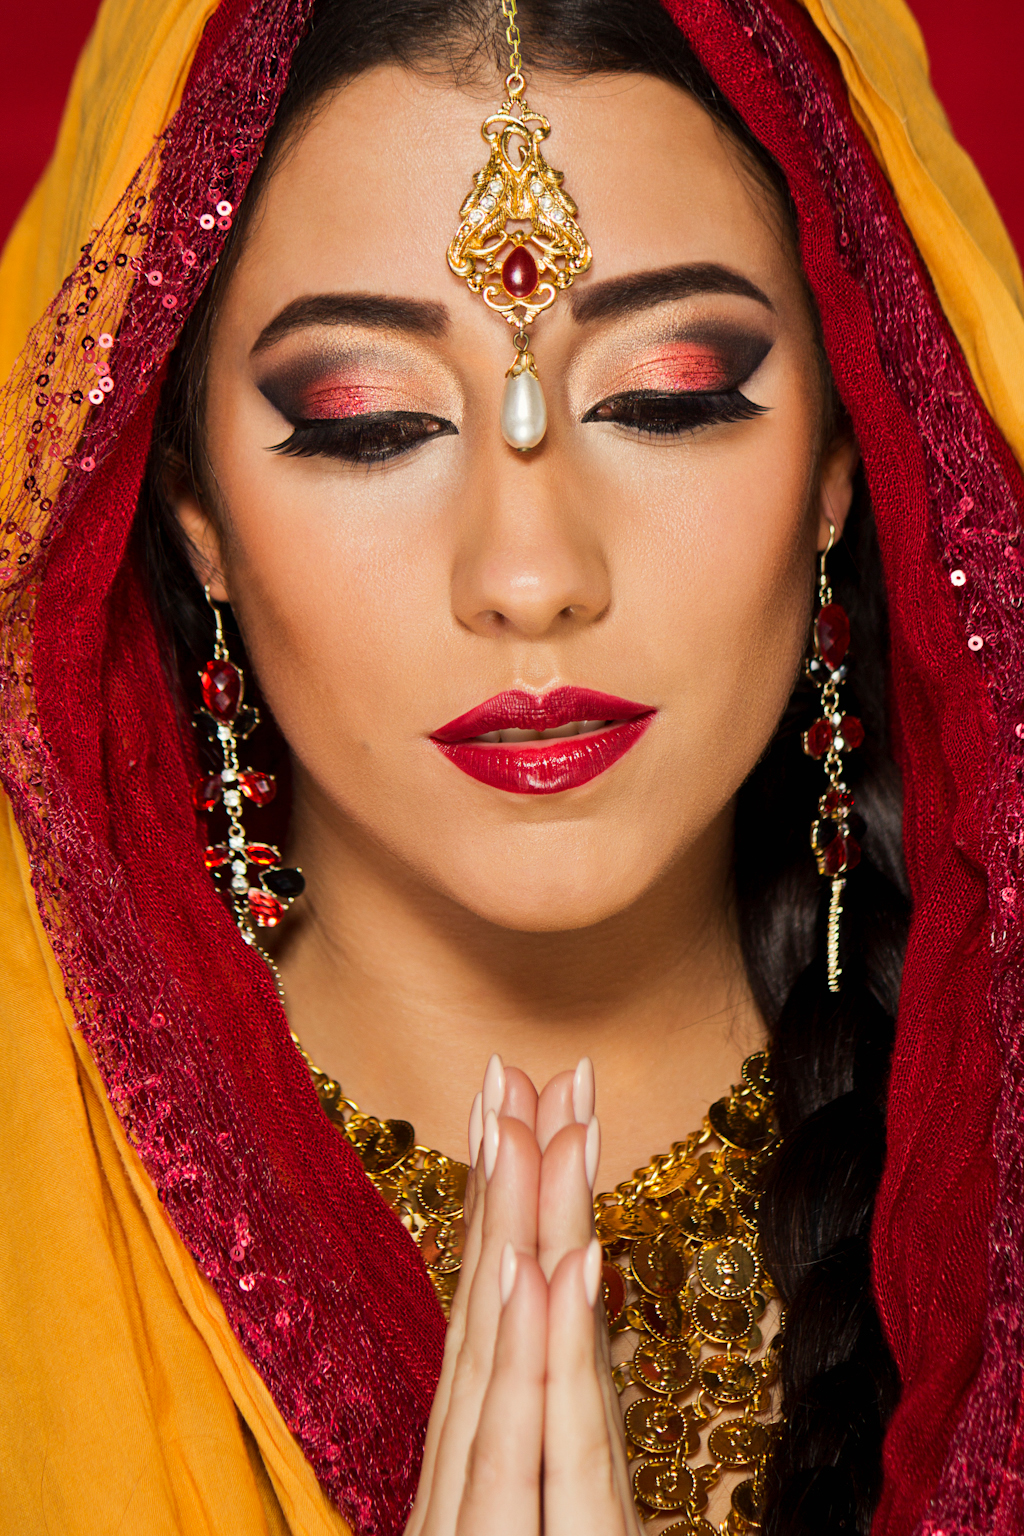 beauty multi cultural interbred studio Ethnic model portrait photoshoot magazine editorial indian egyptian arabic spanish american